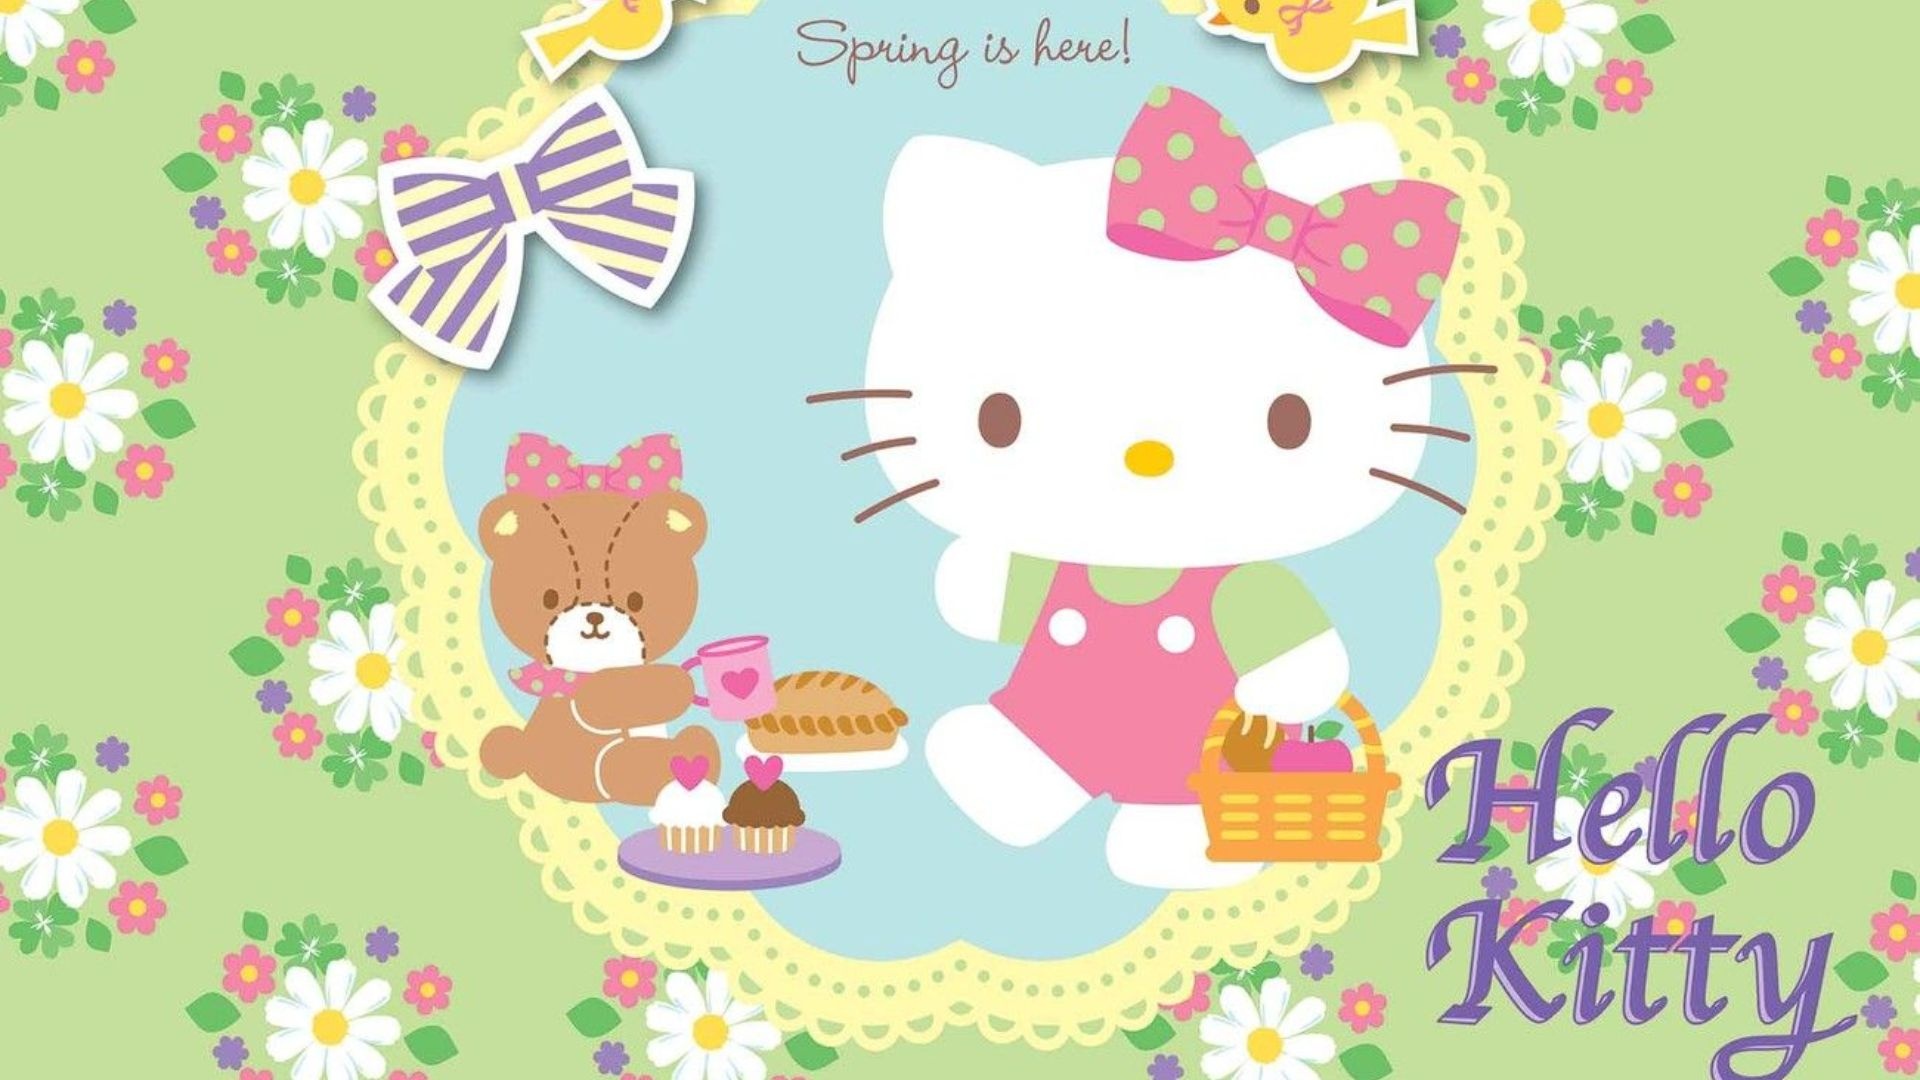 Hello Kitty Spring, Cute character, Hello Kitty wallpapers, Popular franchise, 1920x1080 Full HD Desktop